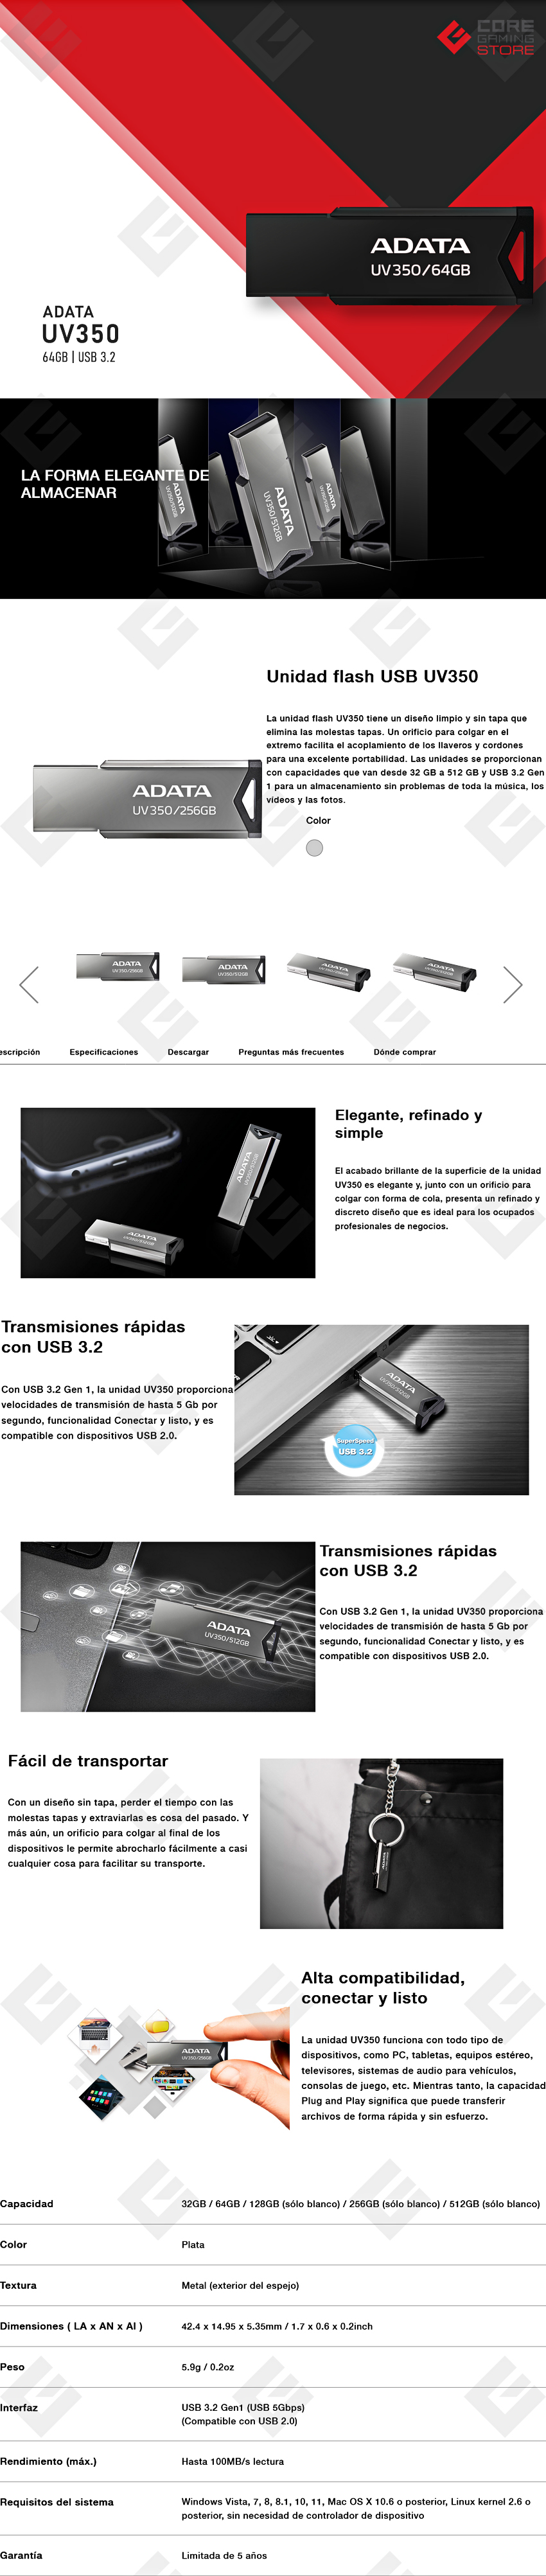 Memoria USB Adata UV350 64GB | Negra | USB 3.2 - AUV350-64G-RBK